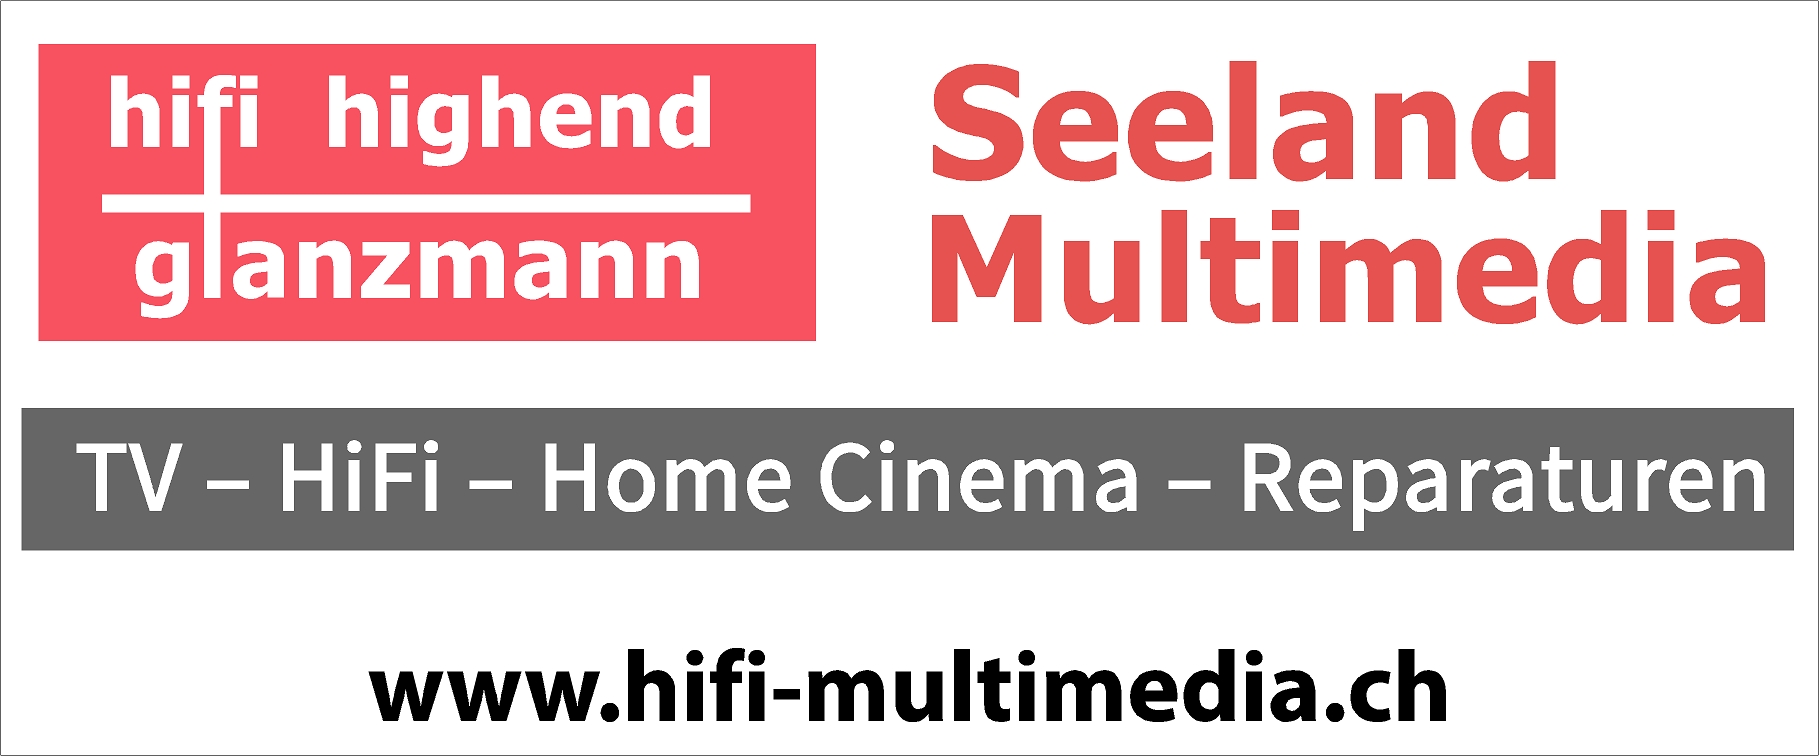 Seeland_Multimedia.jpg